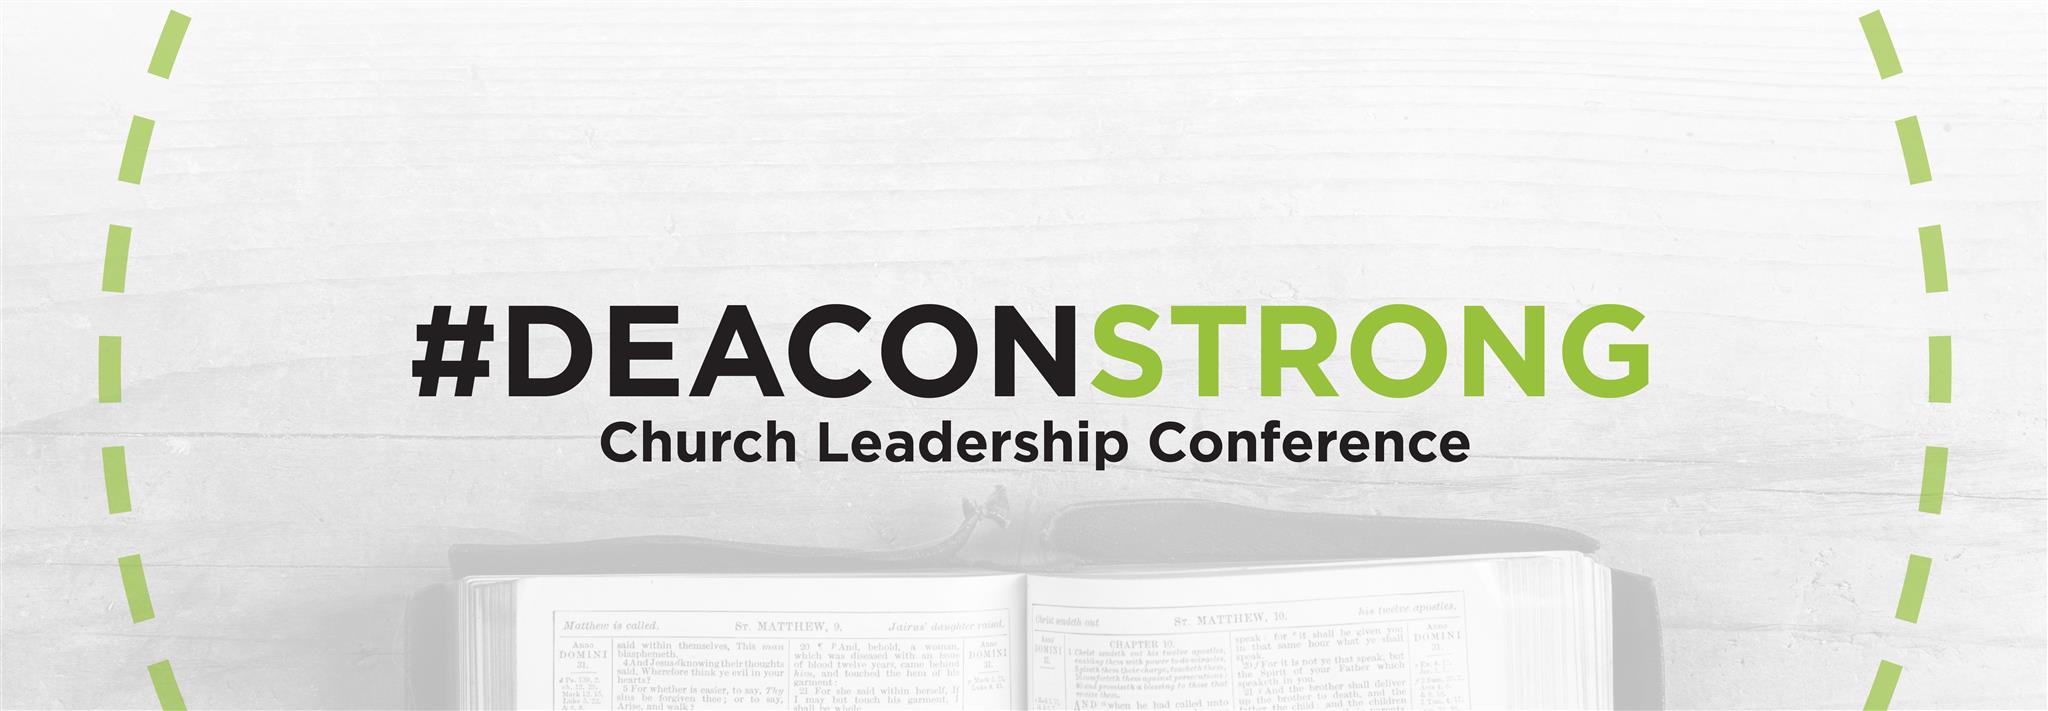 Deacon Strong church leadership conference